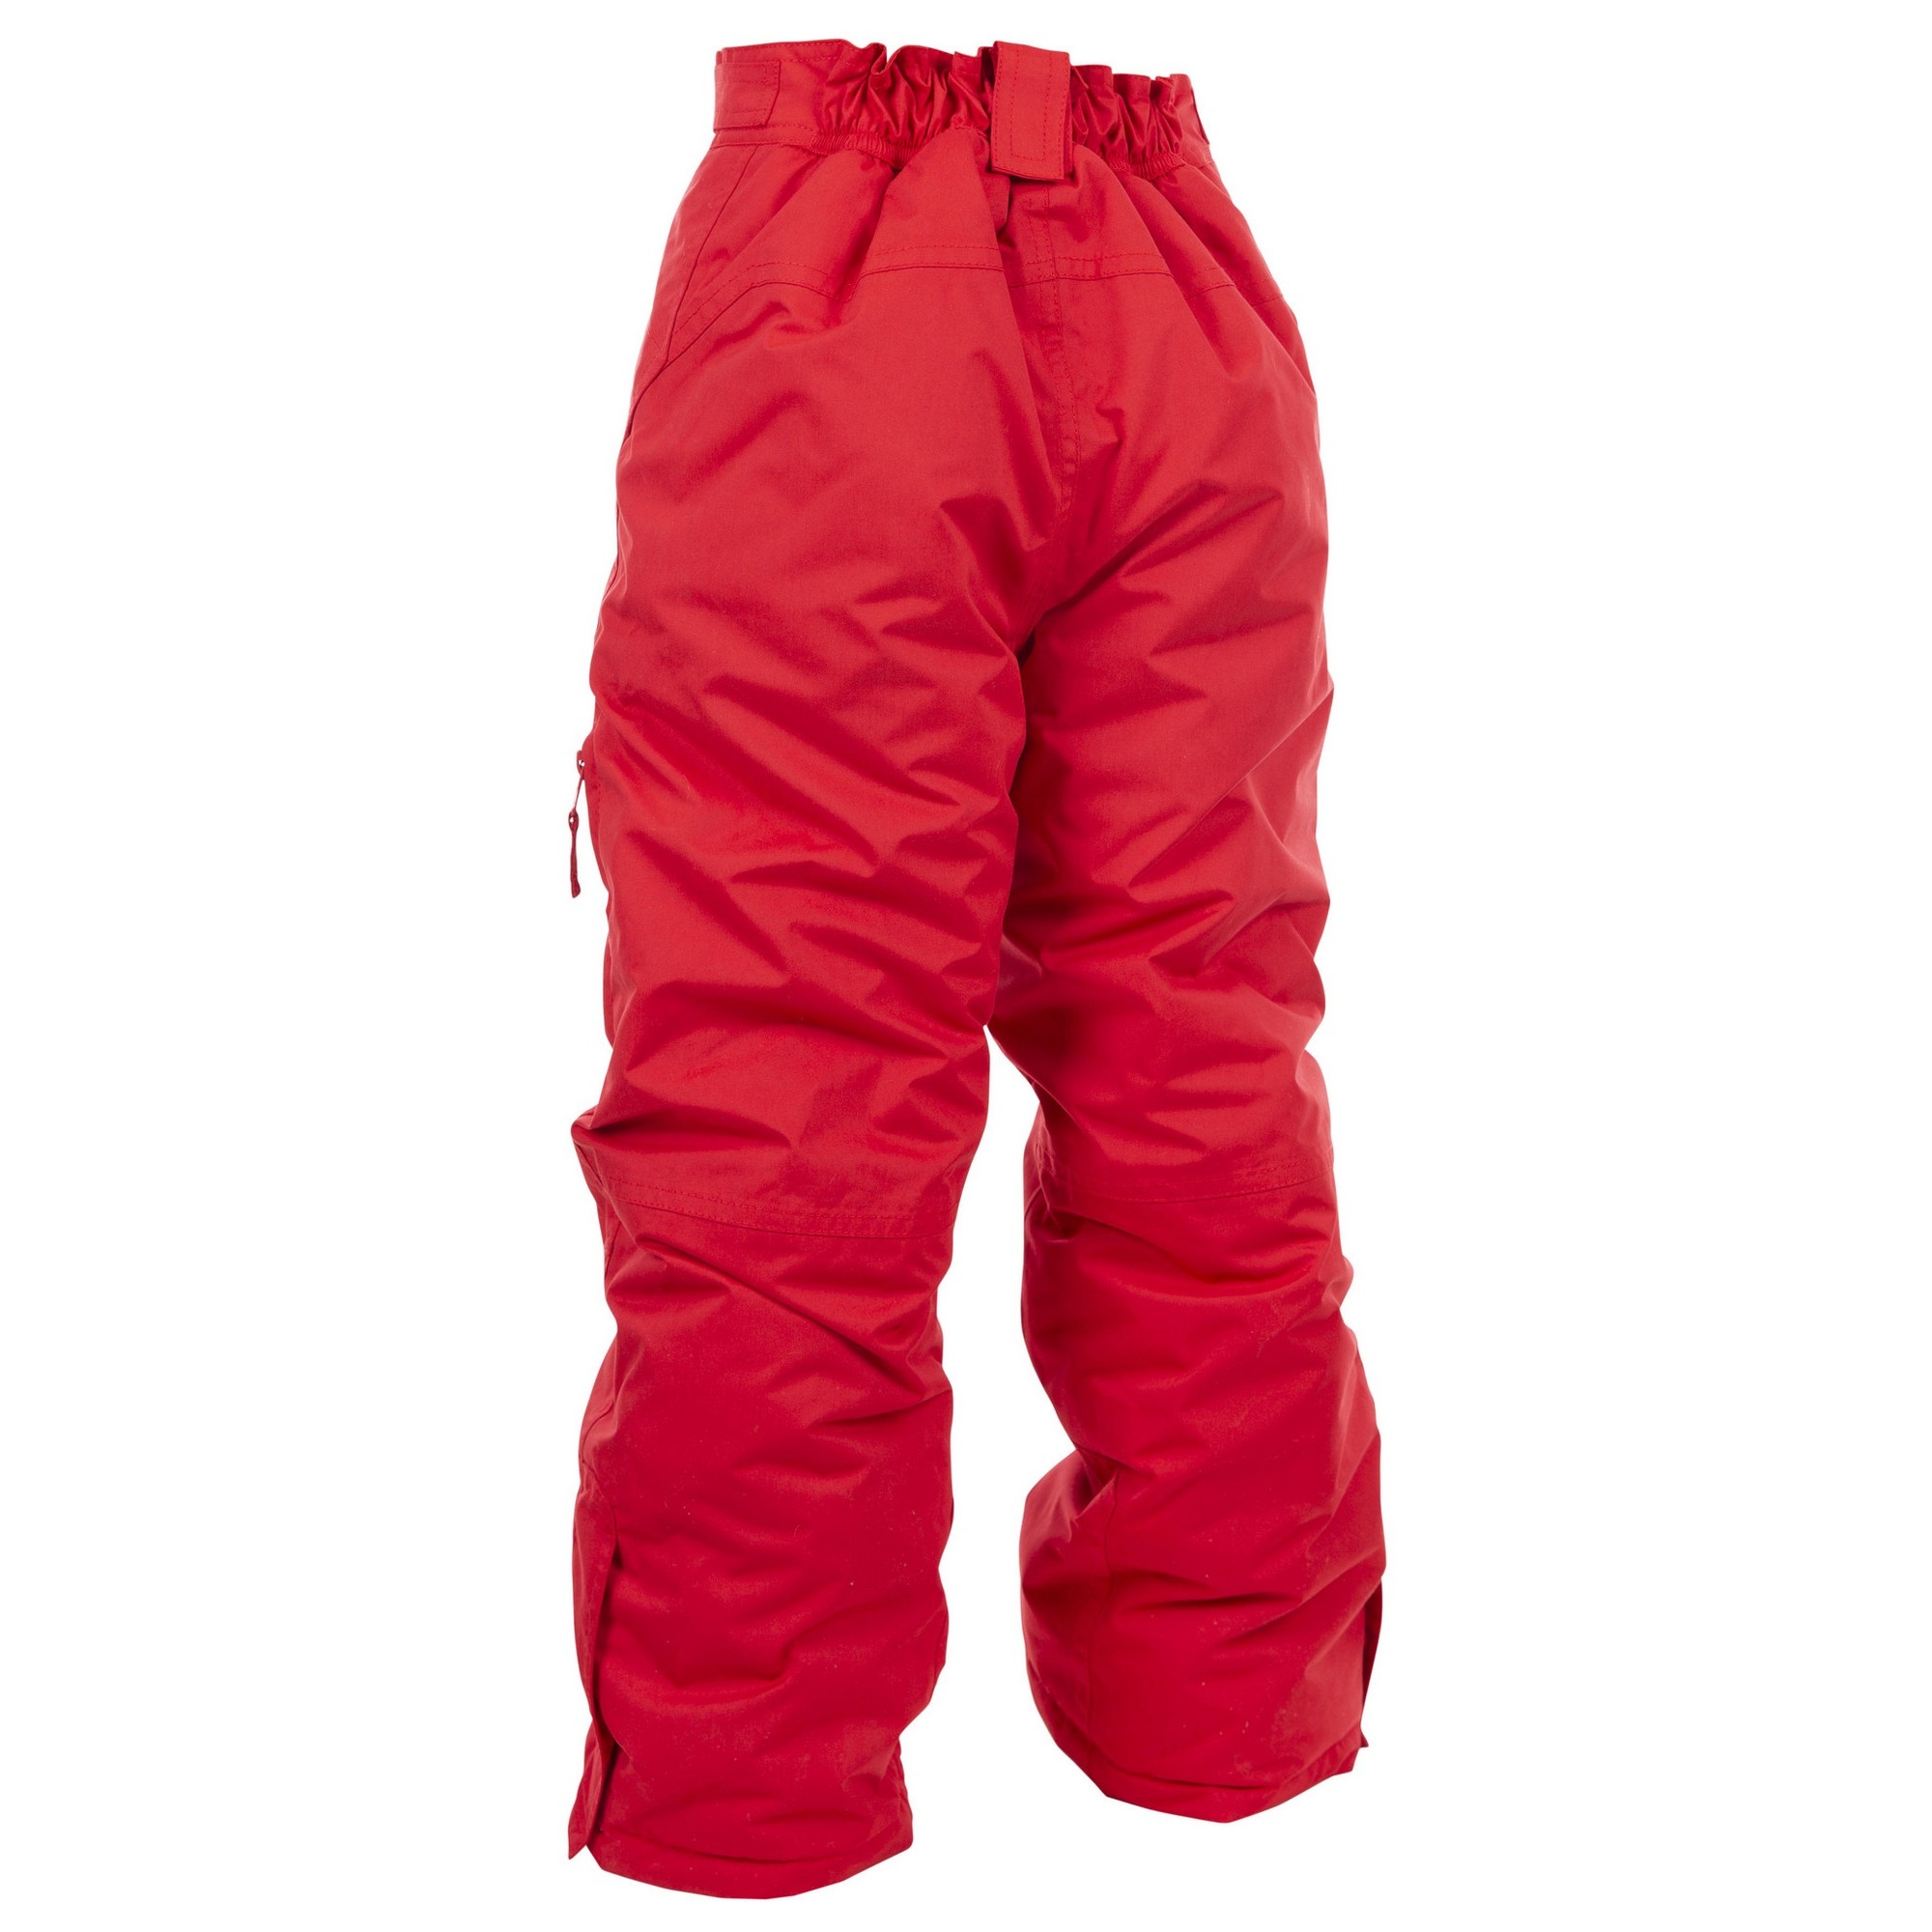 Pantalones De Esquí Impermeables Acolchados Con Tirantes Desmontables